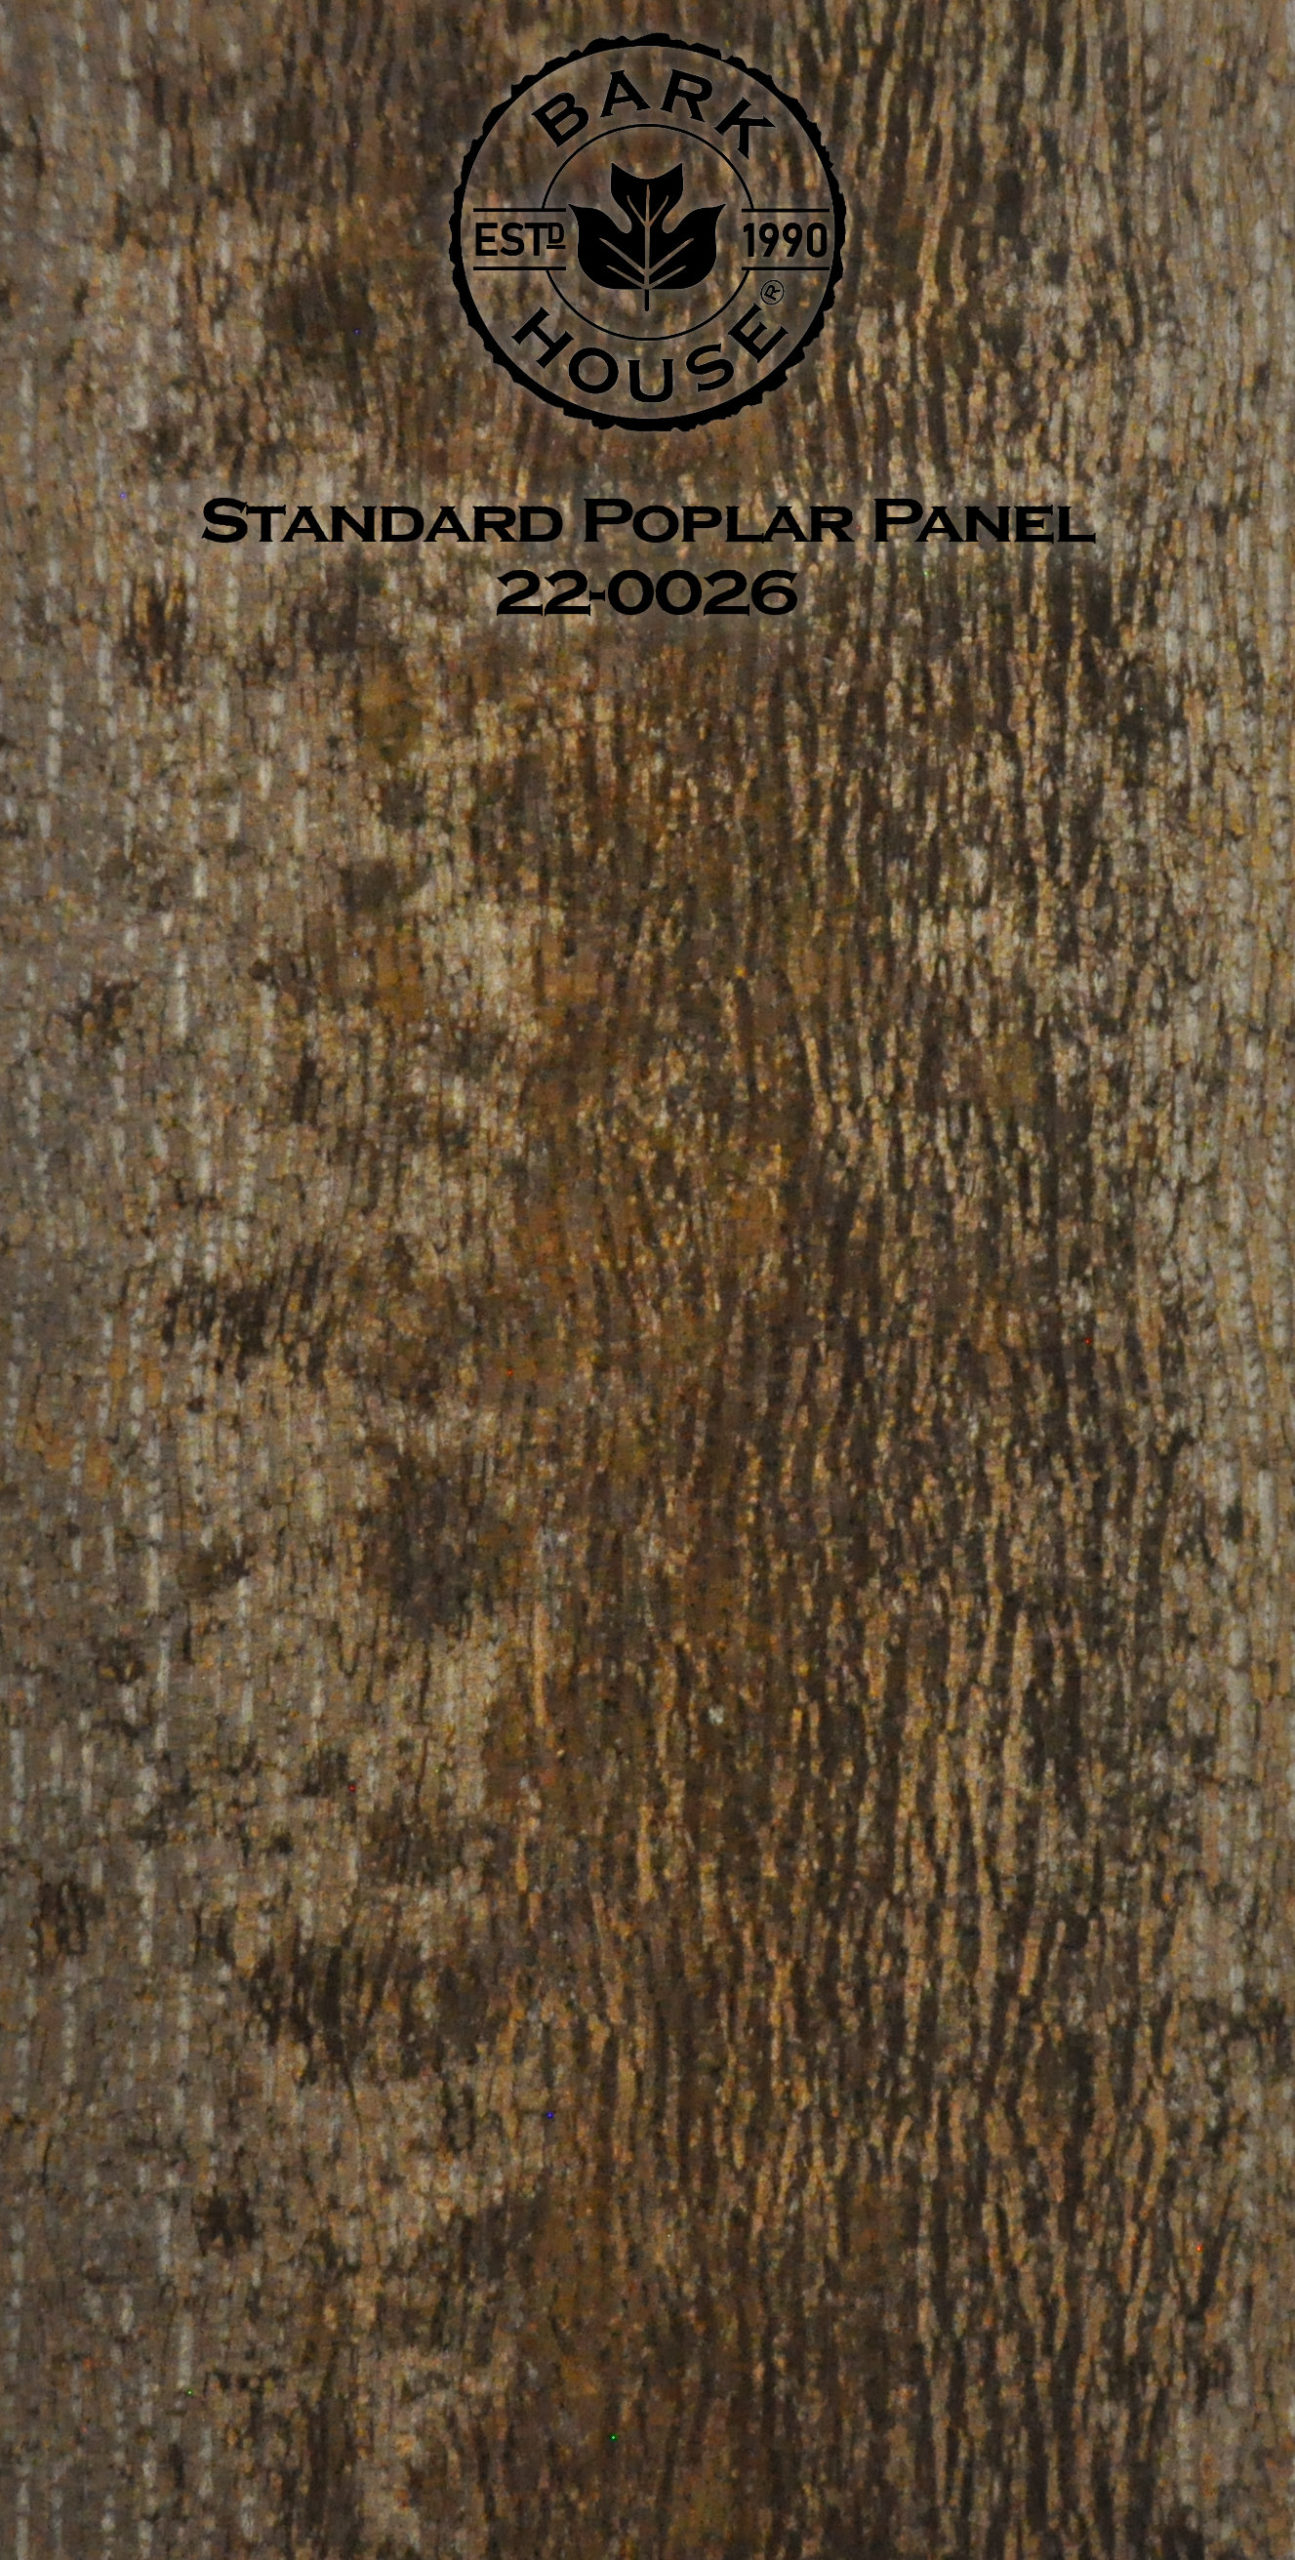 Bark House poplar bark panel SKU POPP-STD-22-0026